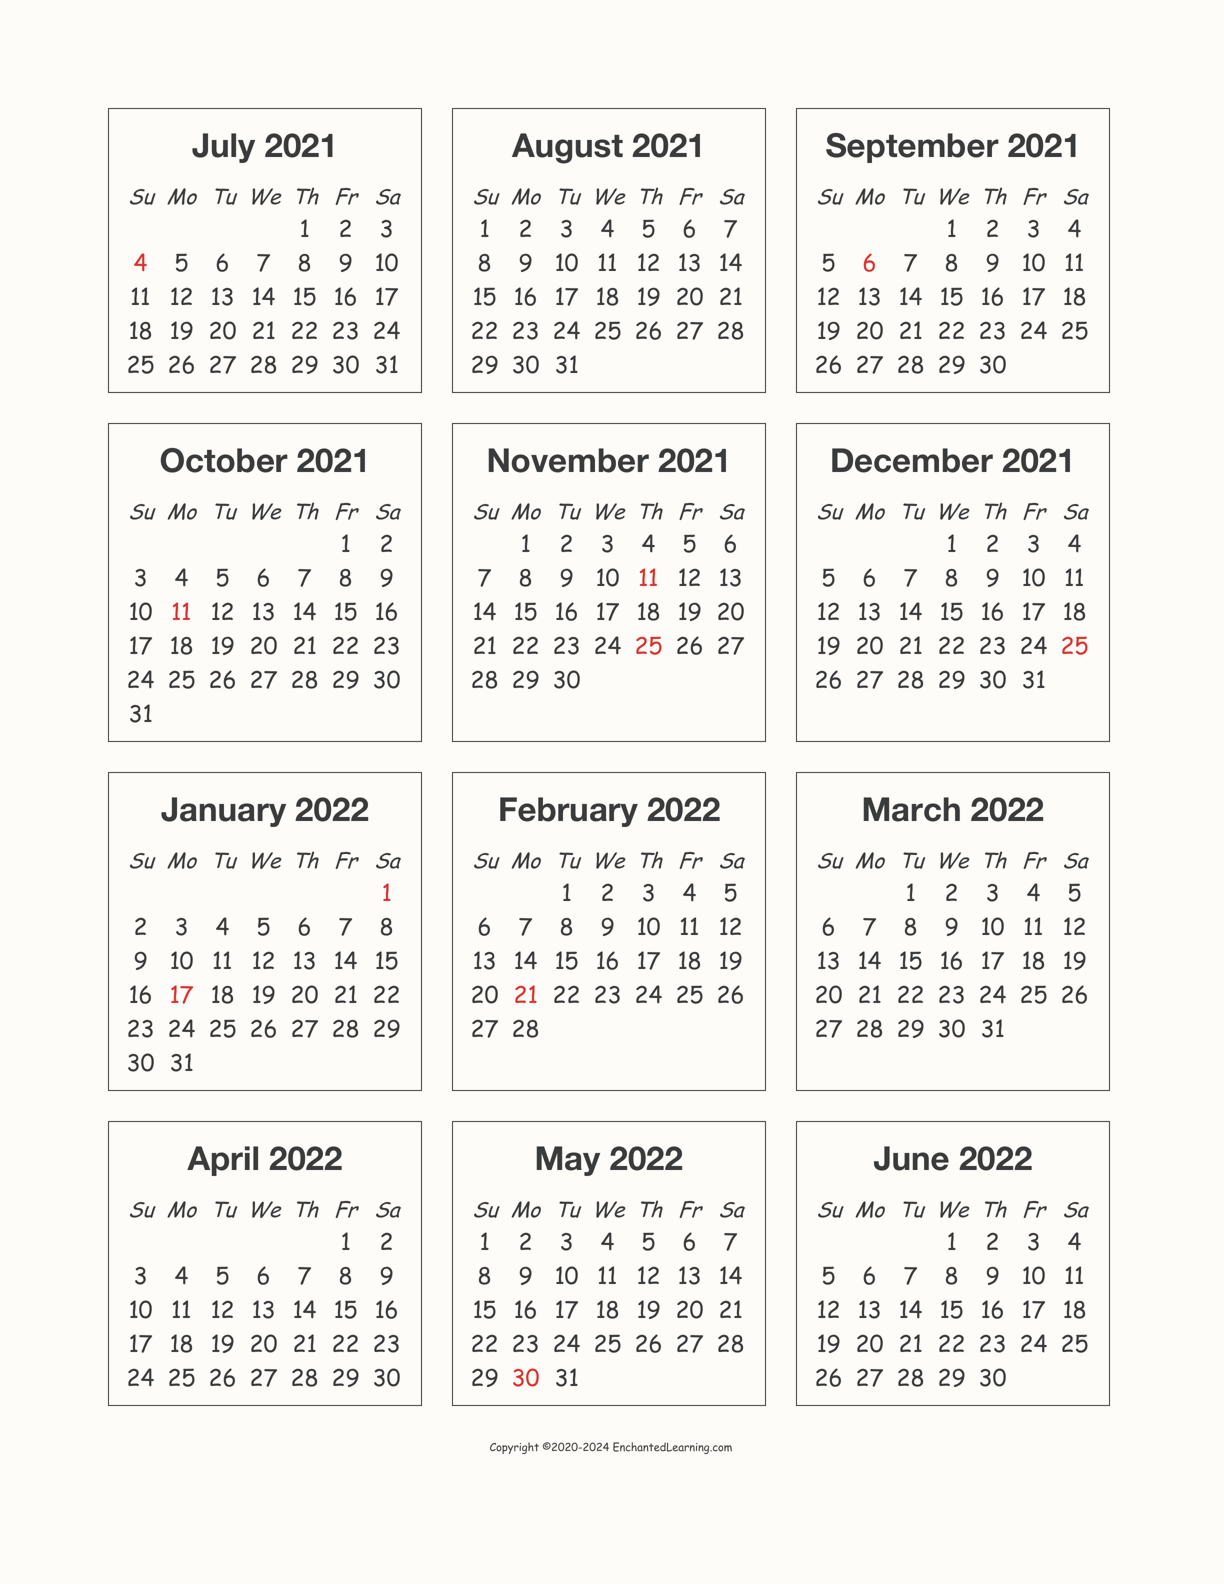 University Of Illinois Champaign Urbana 20222023 Calendar March 2022